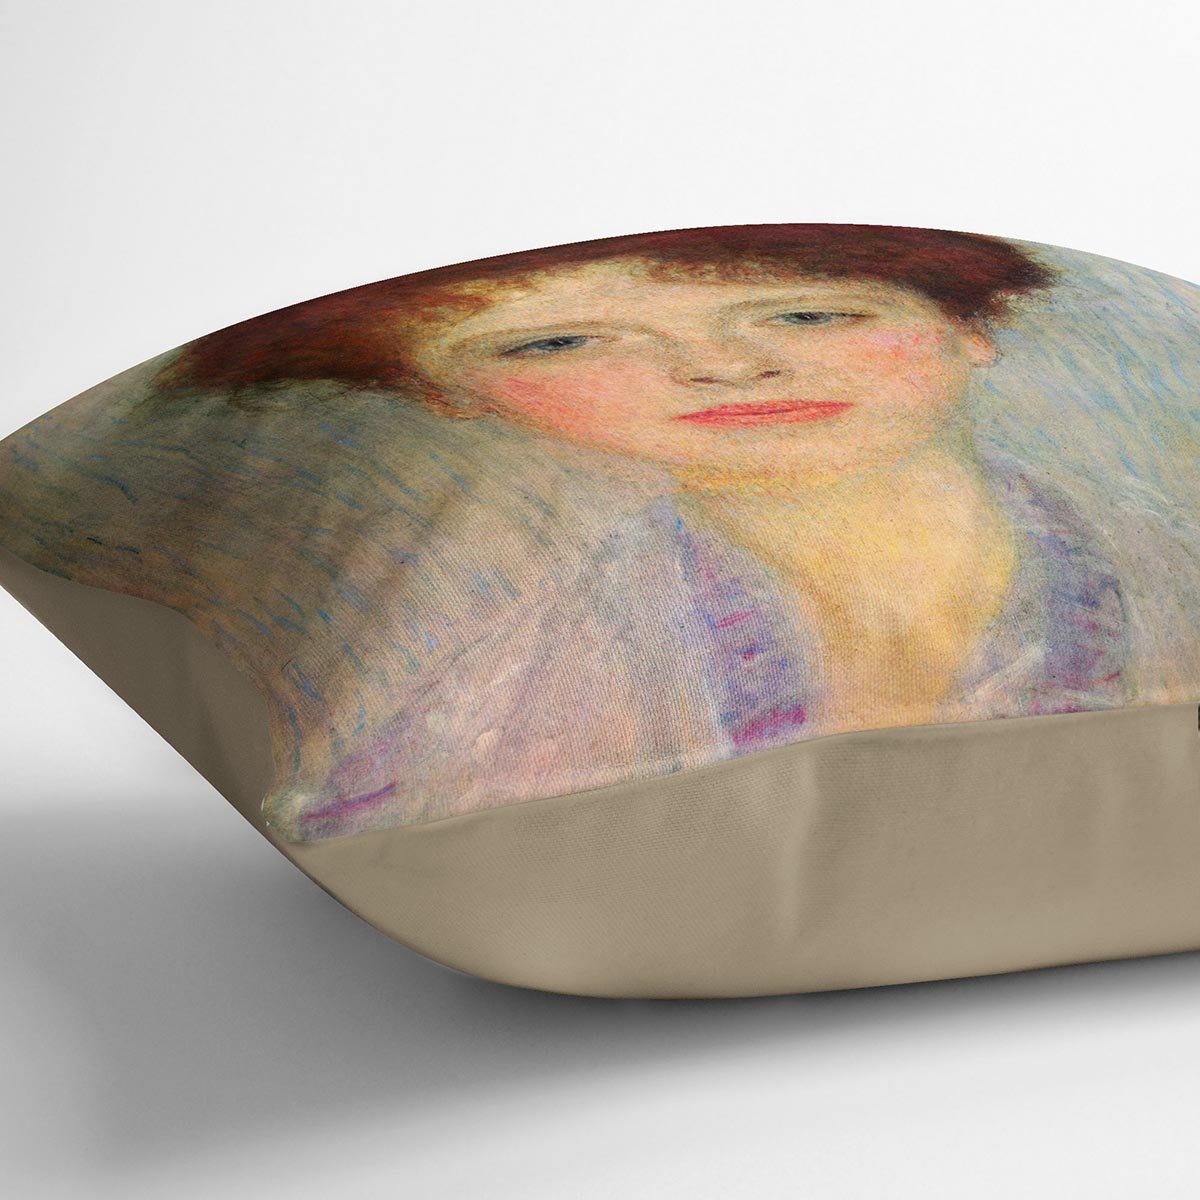 Portrait of Gertha Fersovanyi detail by Klimt Throw Pillow